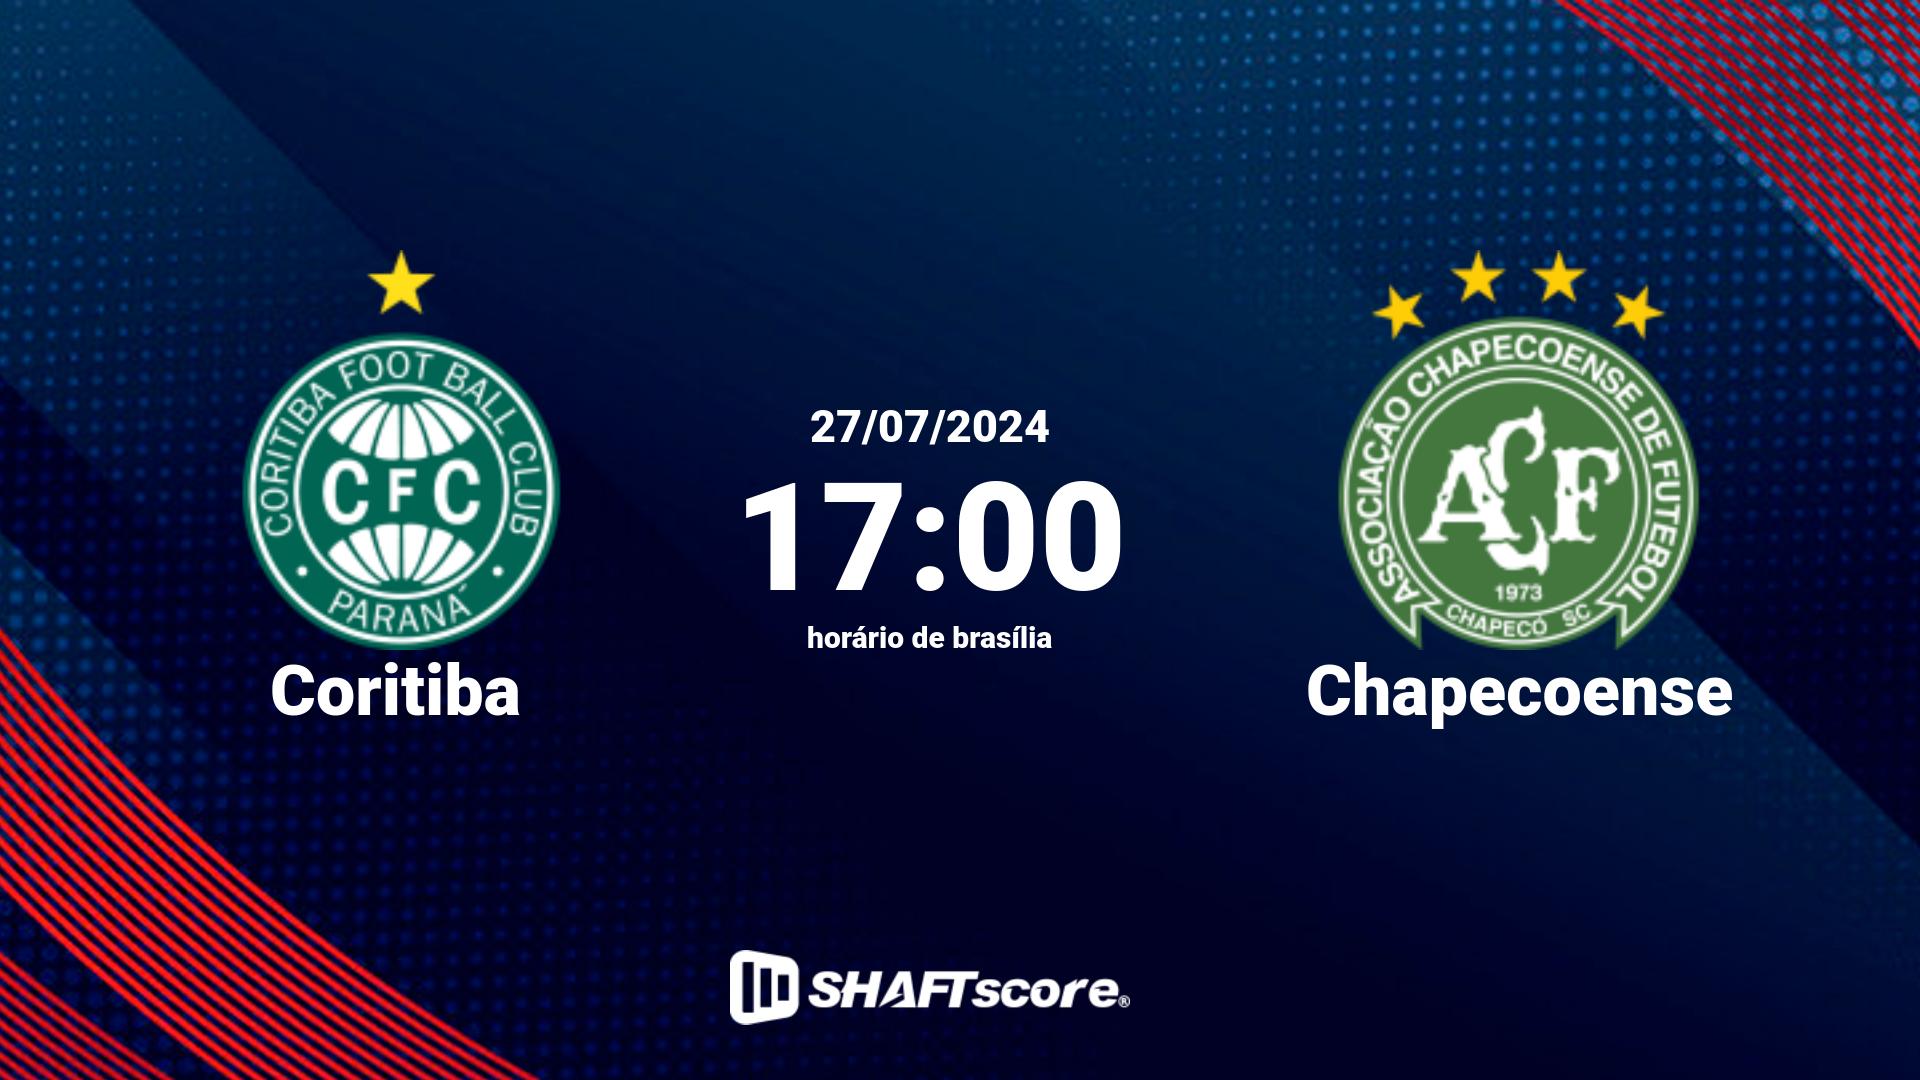 Estatísticas do jogo Coritiba vs Chapecoense 27.07 17:00